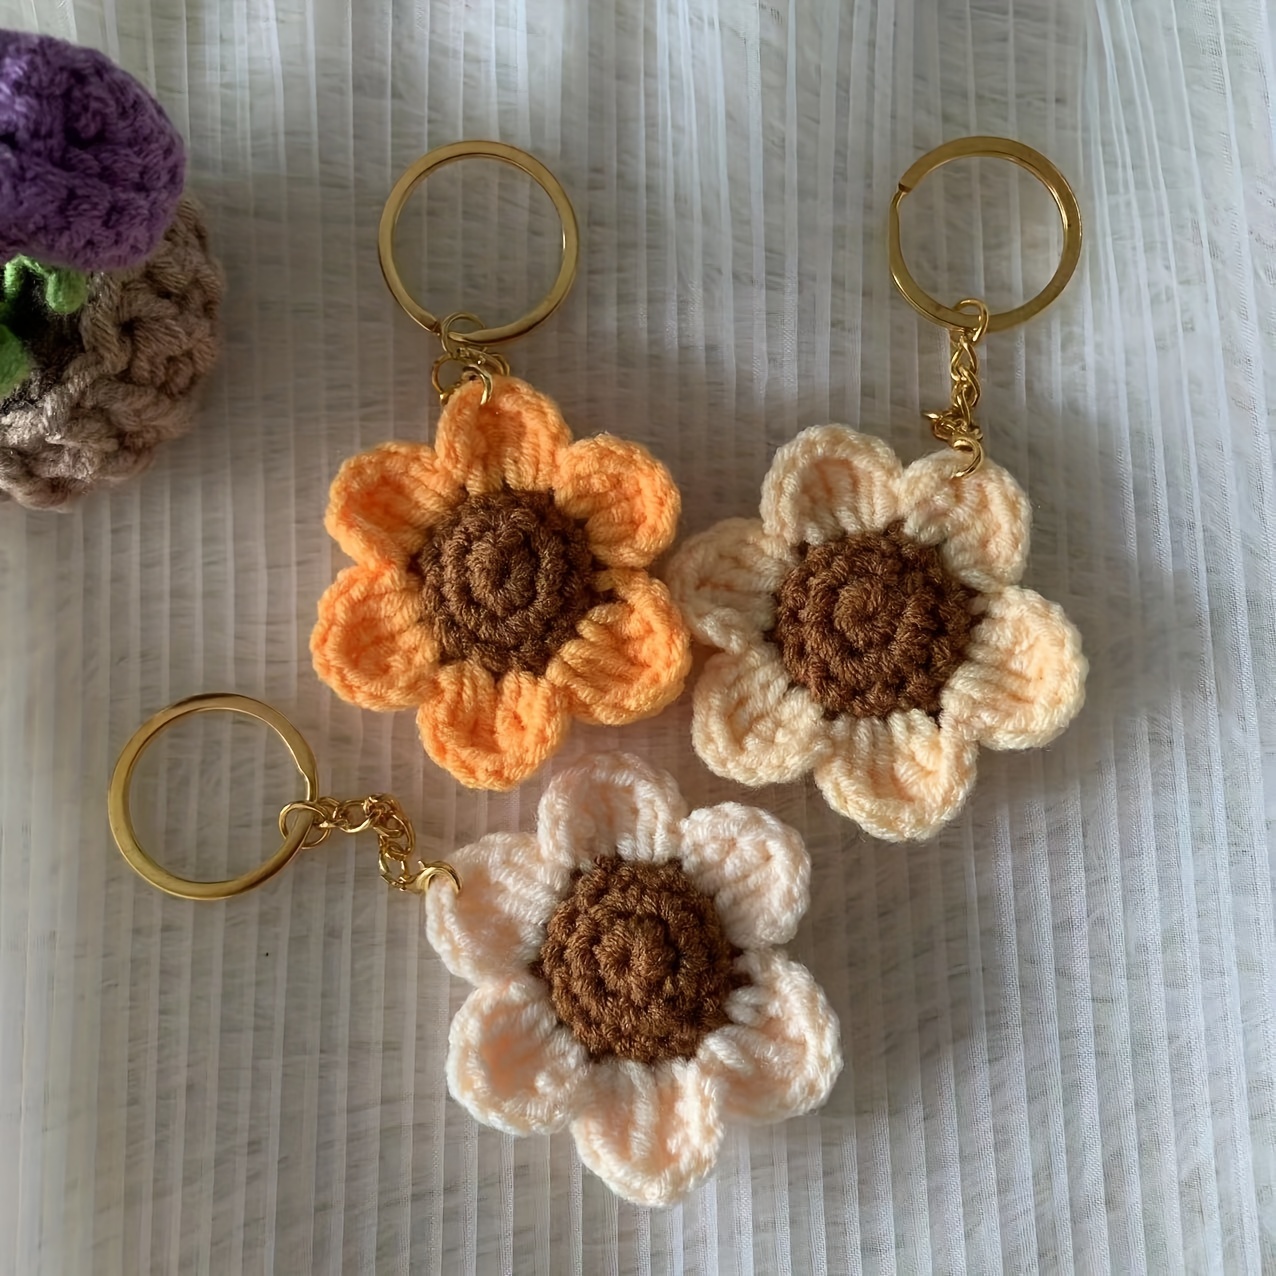 Fabric Flower Key Chain, Key Ring Accessories